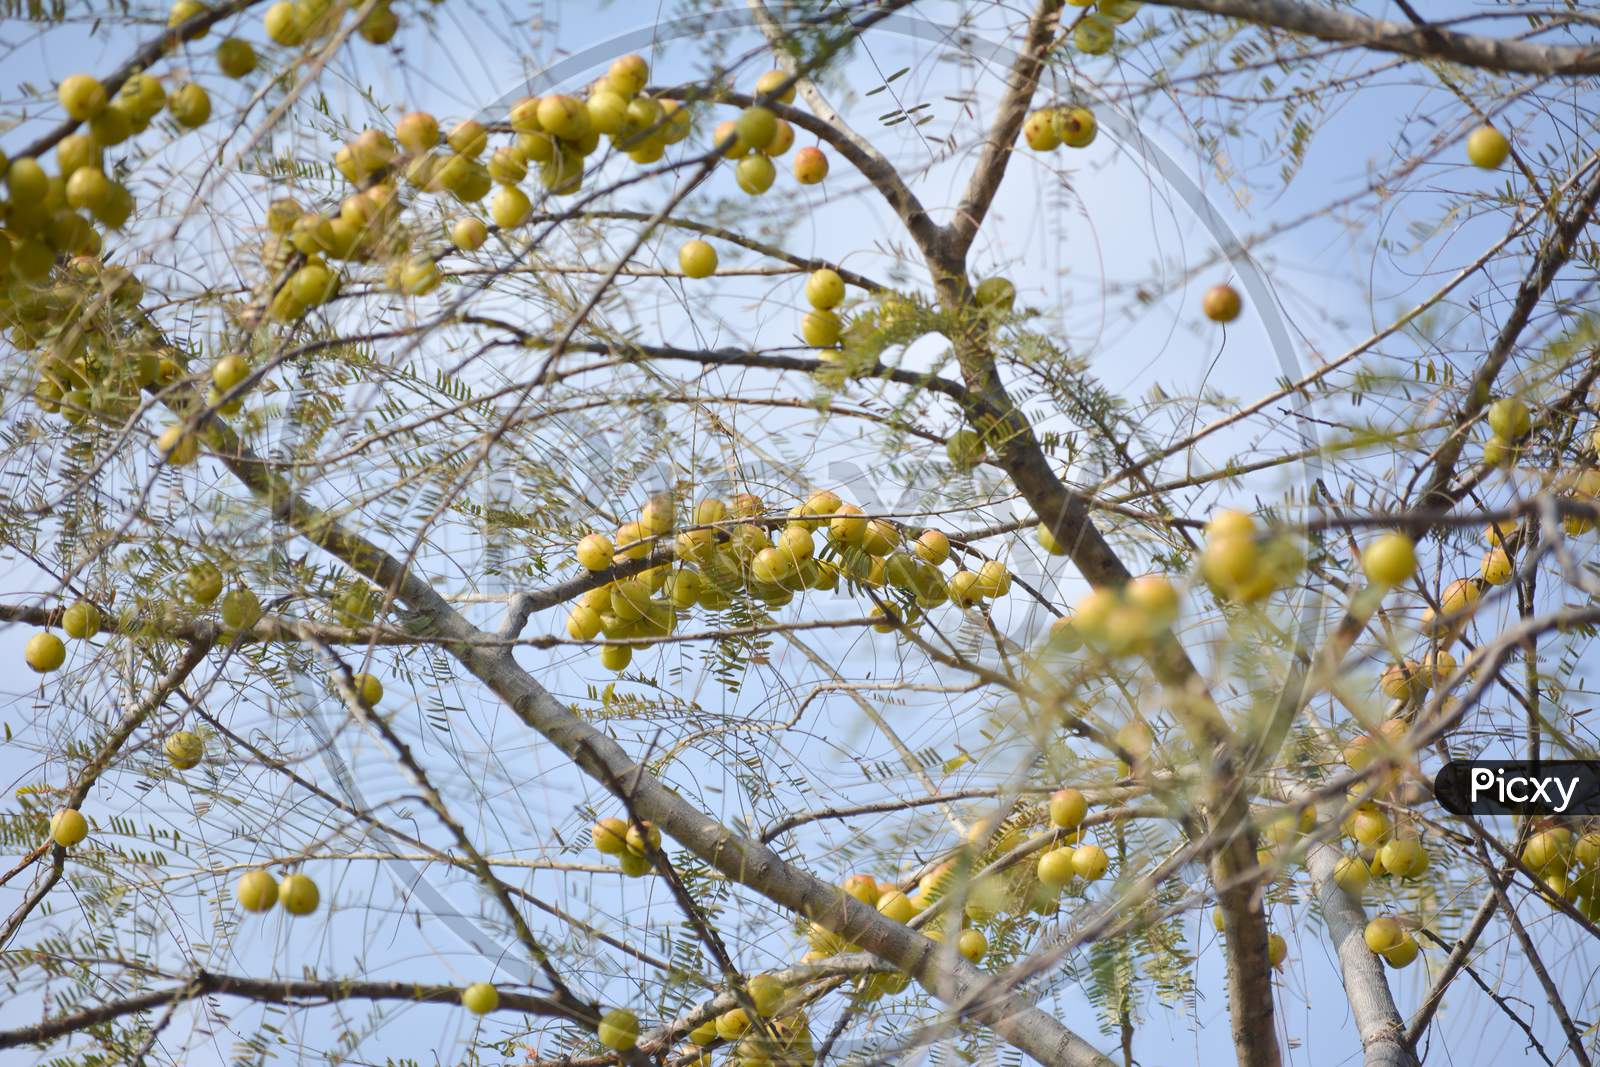 Indian Gooseberries or Amla fruit hanging on tree